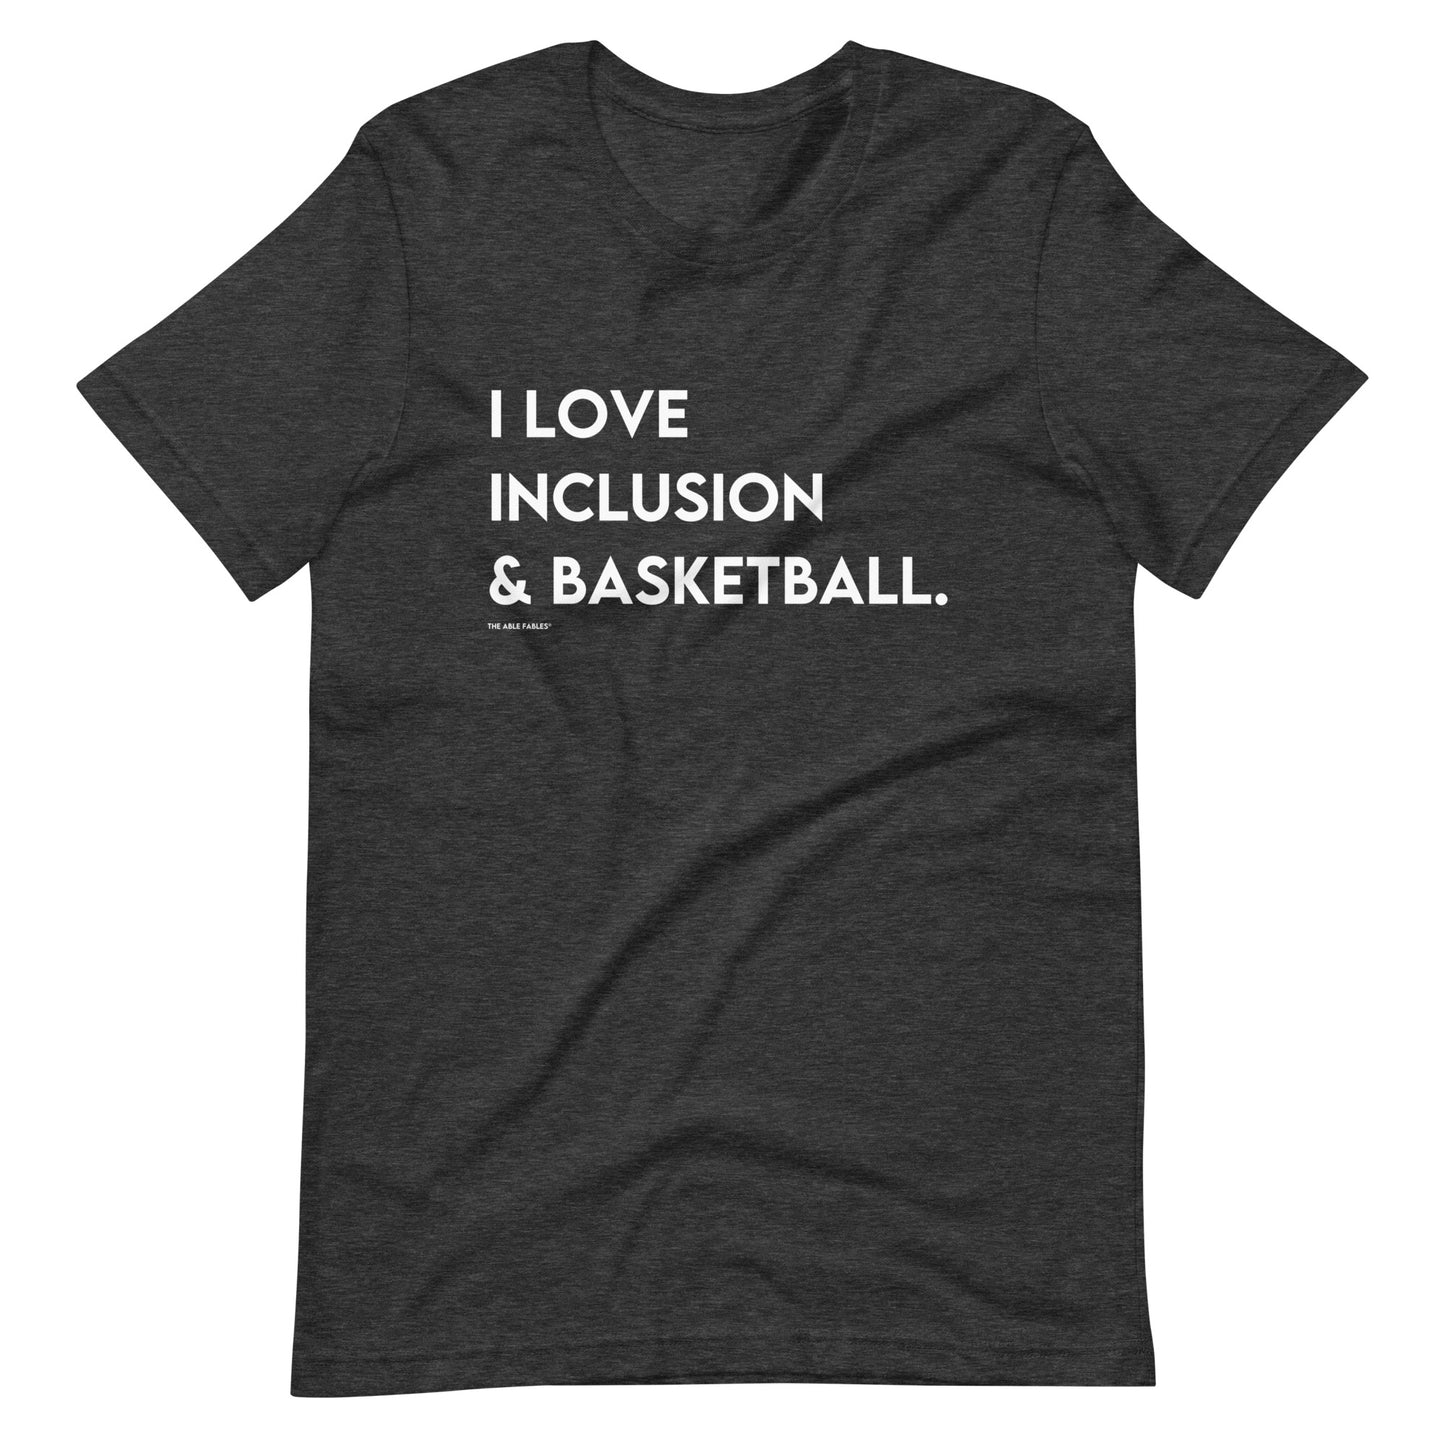 "I Love Inclusion & Basketball" Adult Unisex Tee